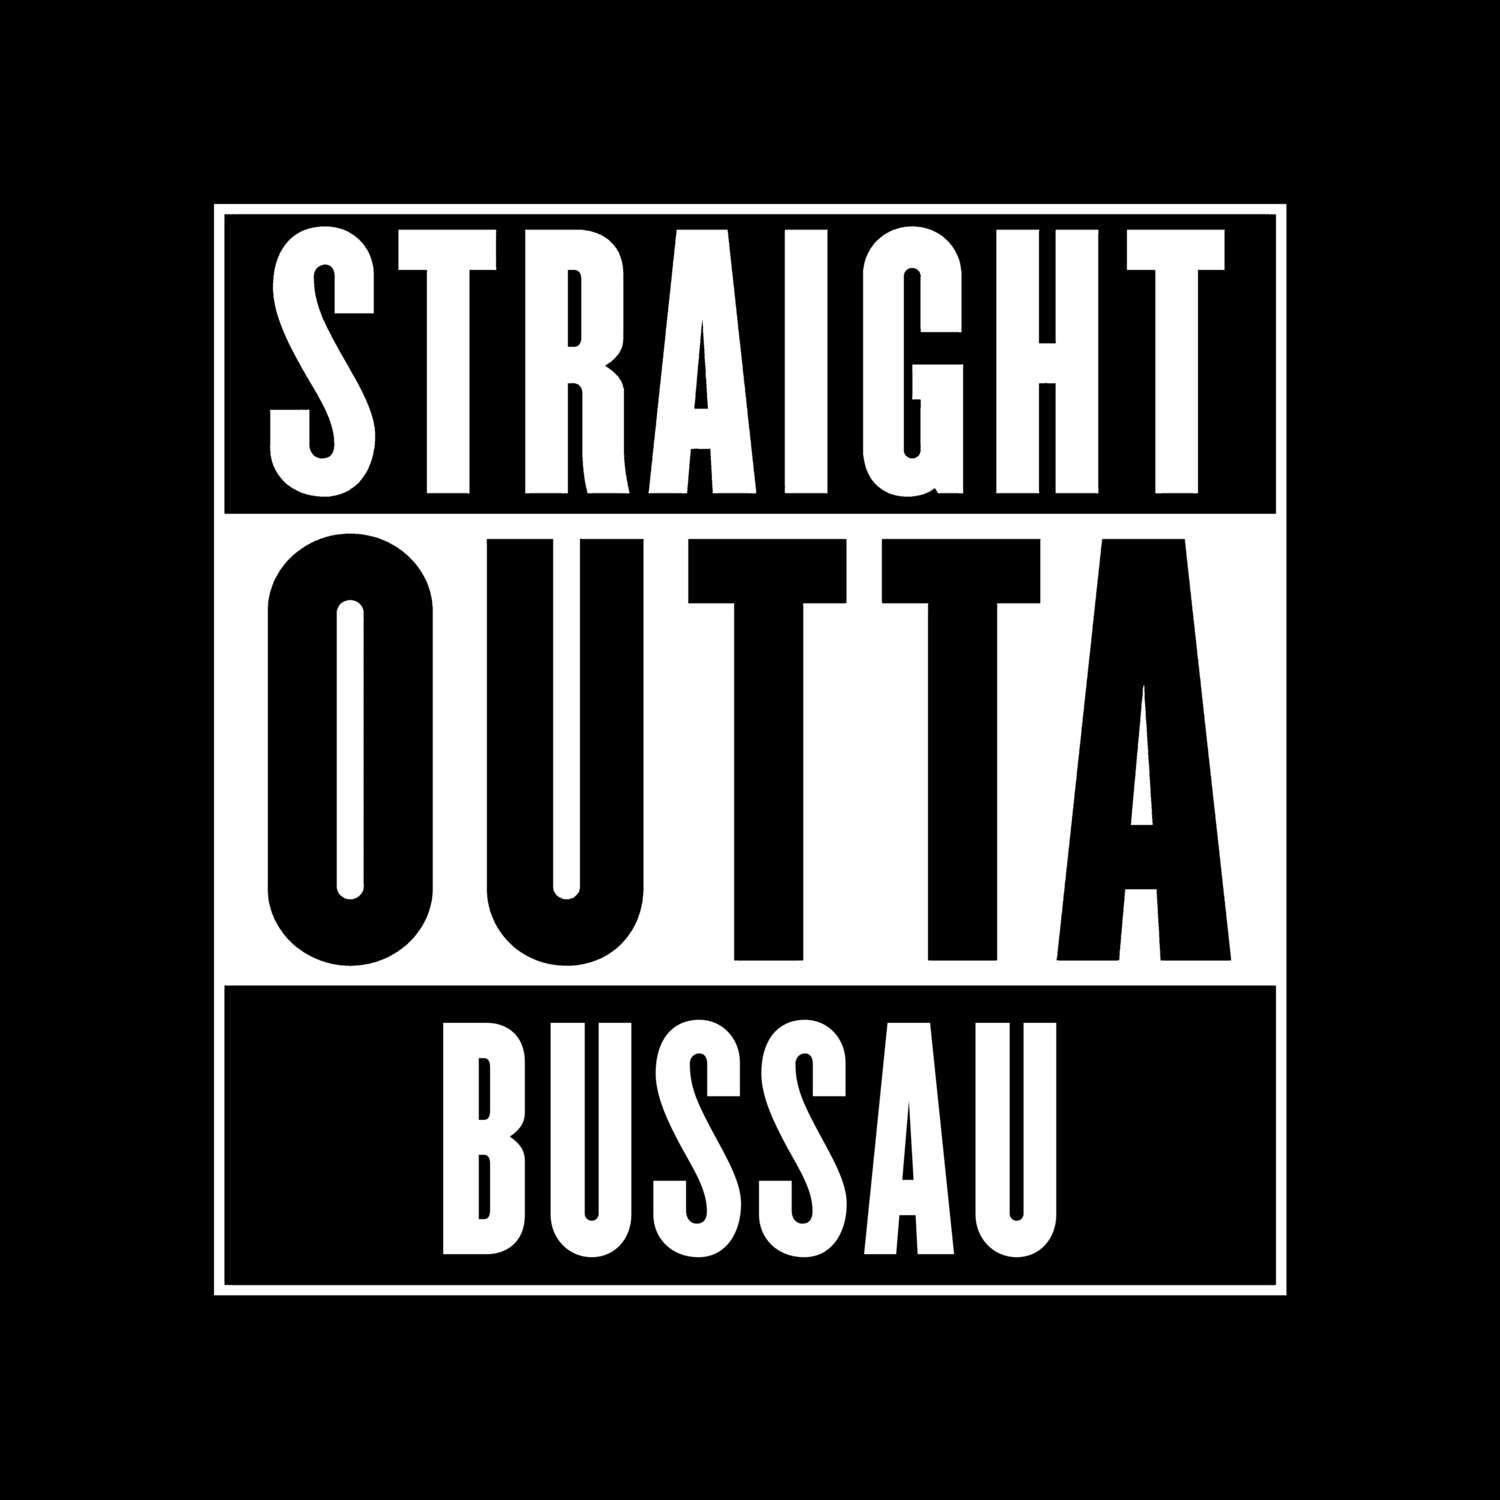 Bussau T-Shirt »Straight Outta«